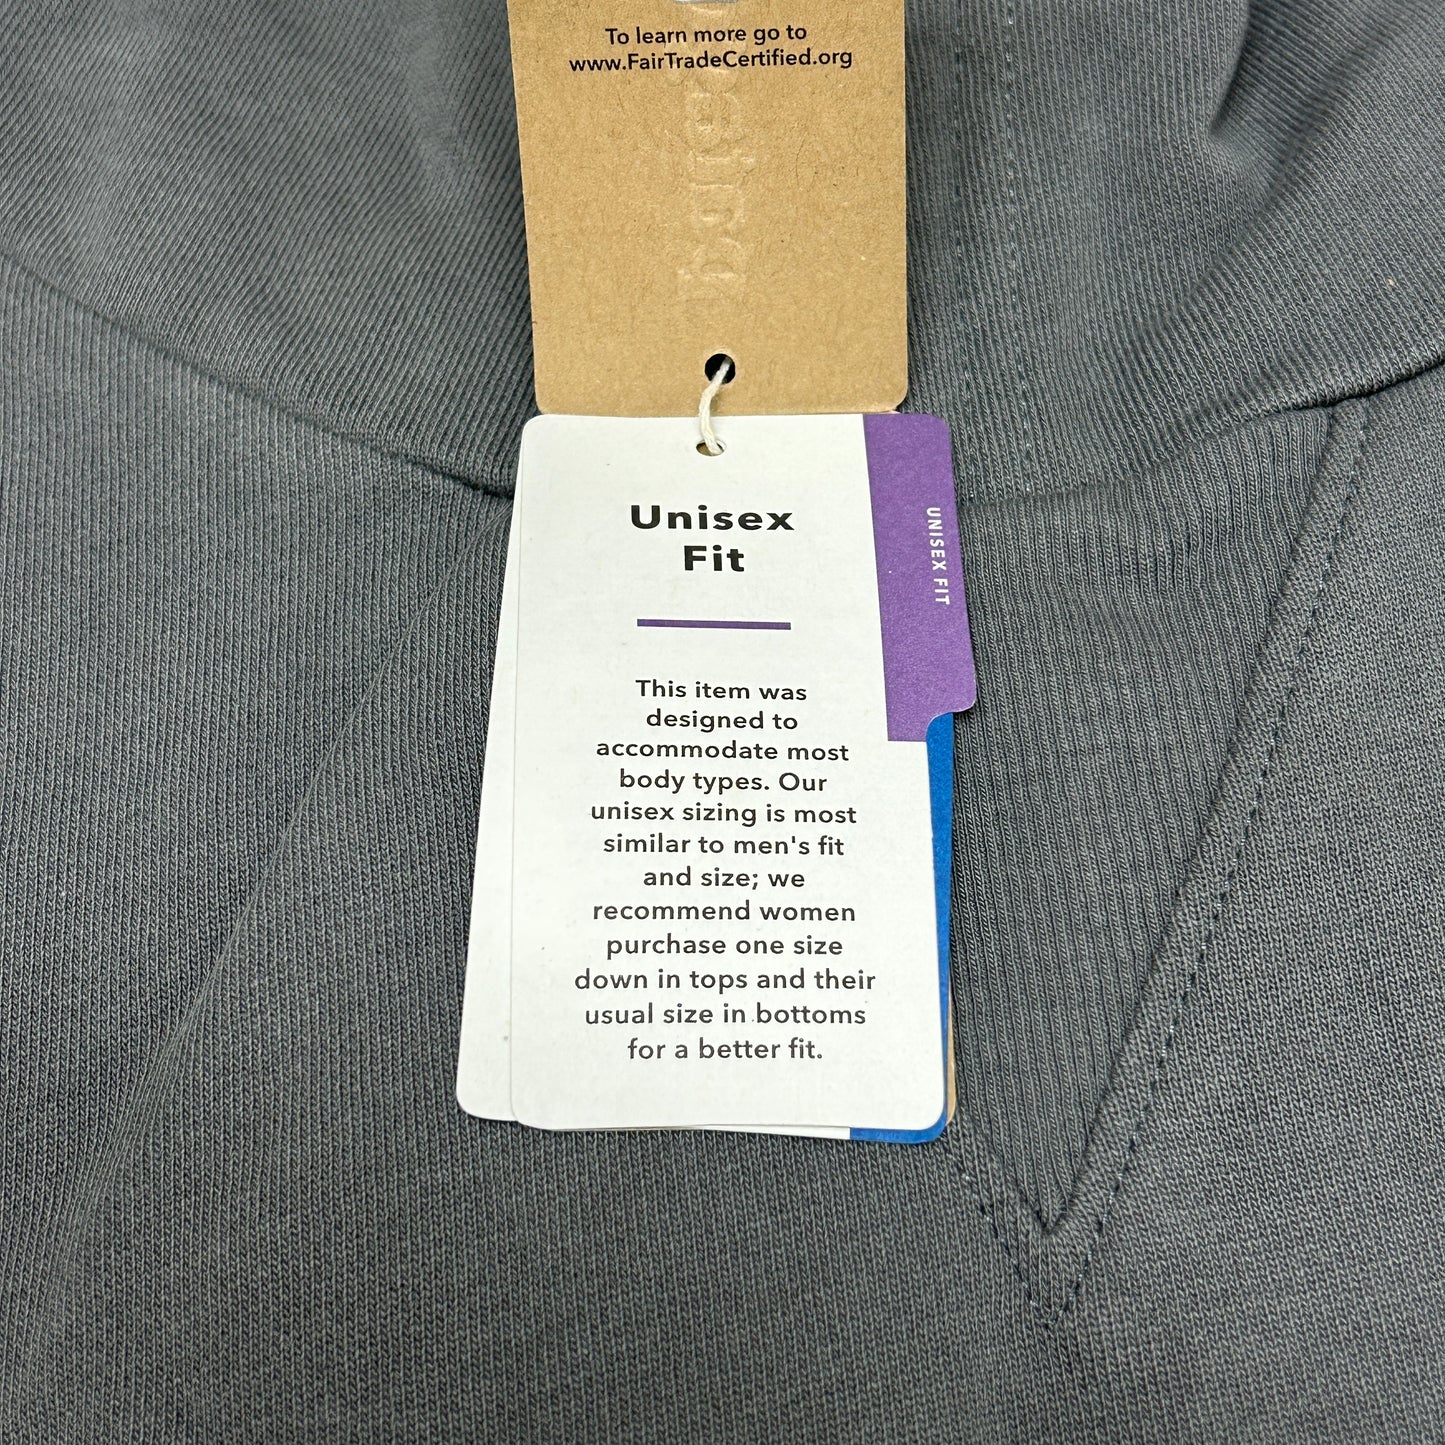 PATAGONIA Regenerative Organic Cotton Hoody Sweatshirt Sz S Noble Grey (New)